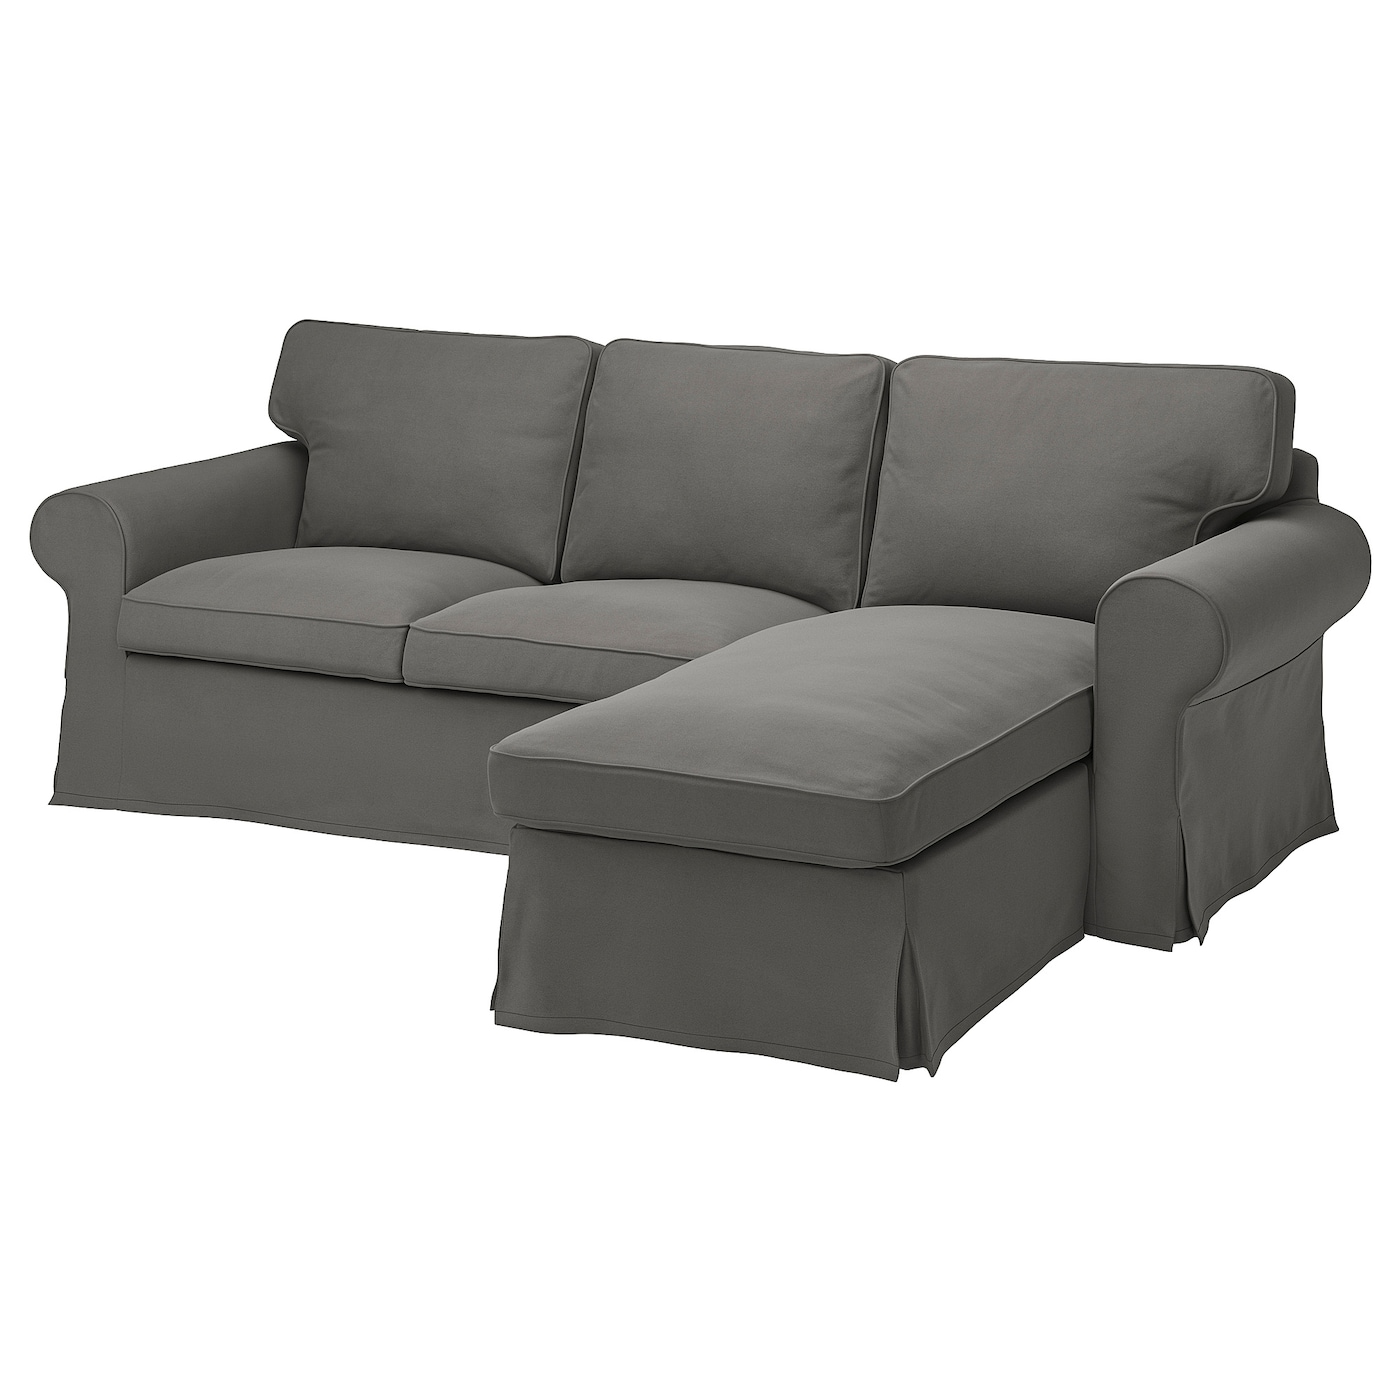 ЭКТОРП 3-местный диван+диван, Хакебо темно-серый EKTORP IKEA чехол на 2 местный угловой диван ikea ektorp светло серый